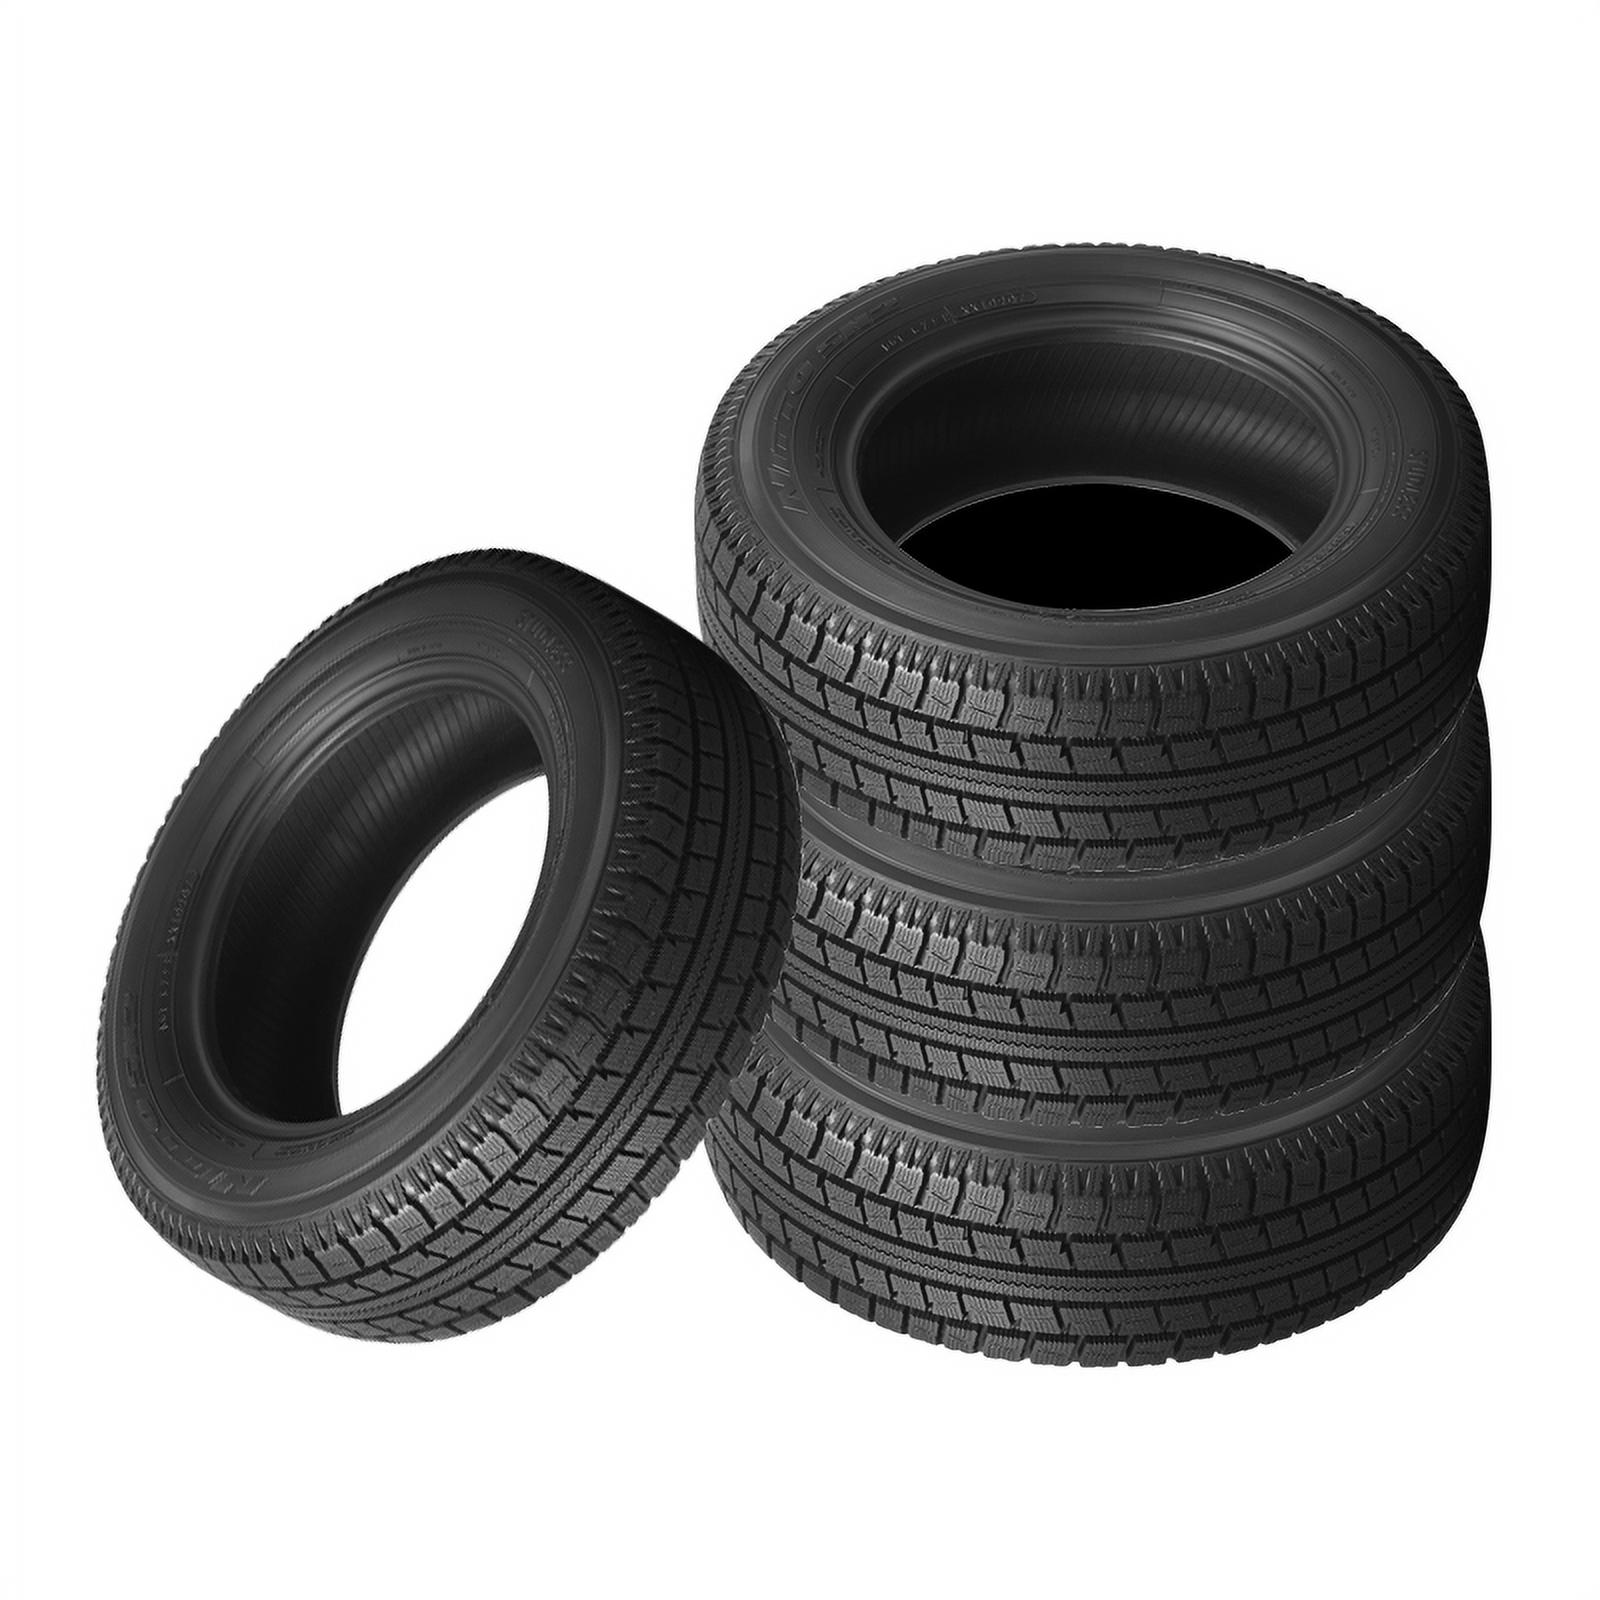 Nitto winter ntsn2 LT235/65R17 winter tire - image 3 of 5